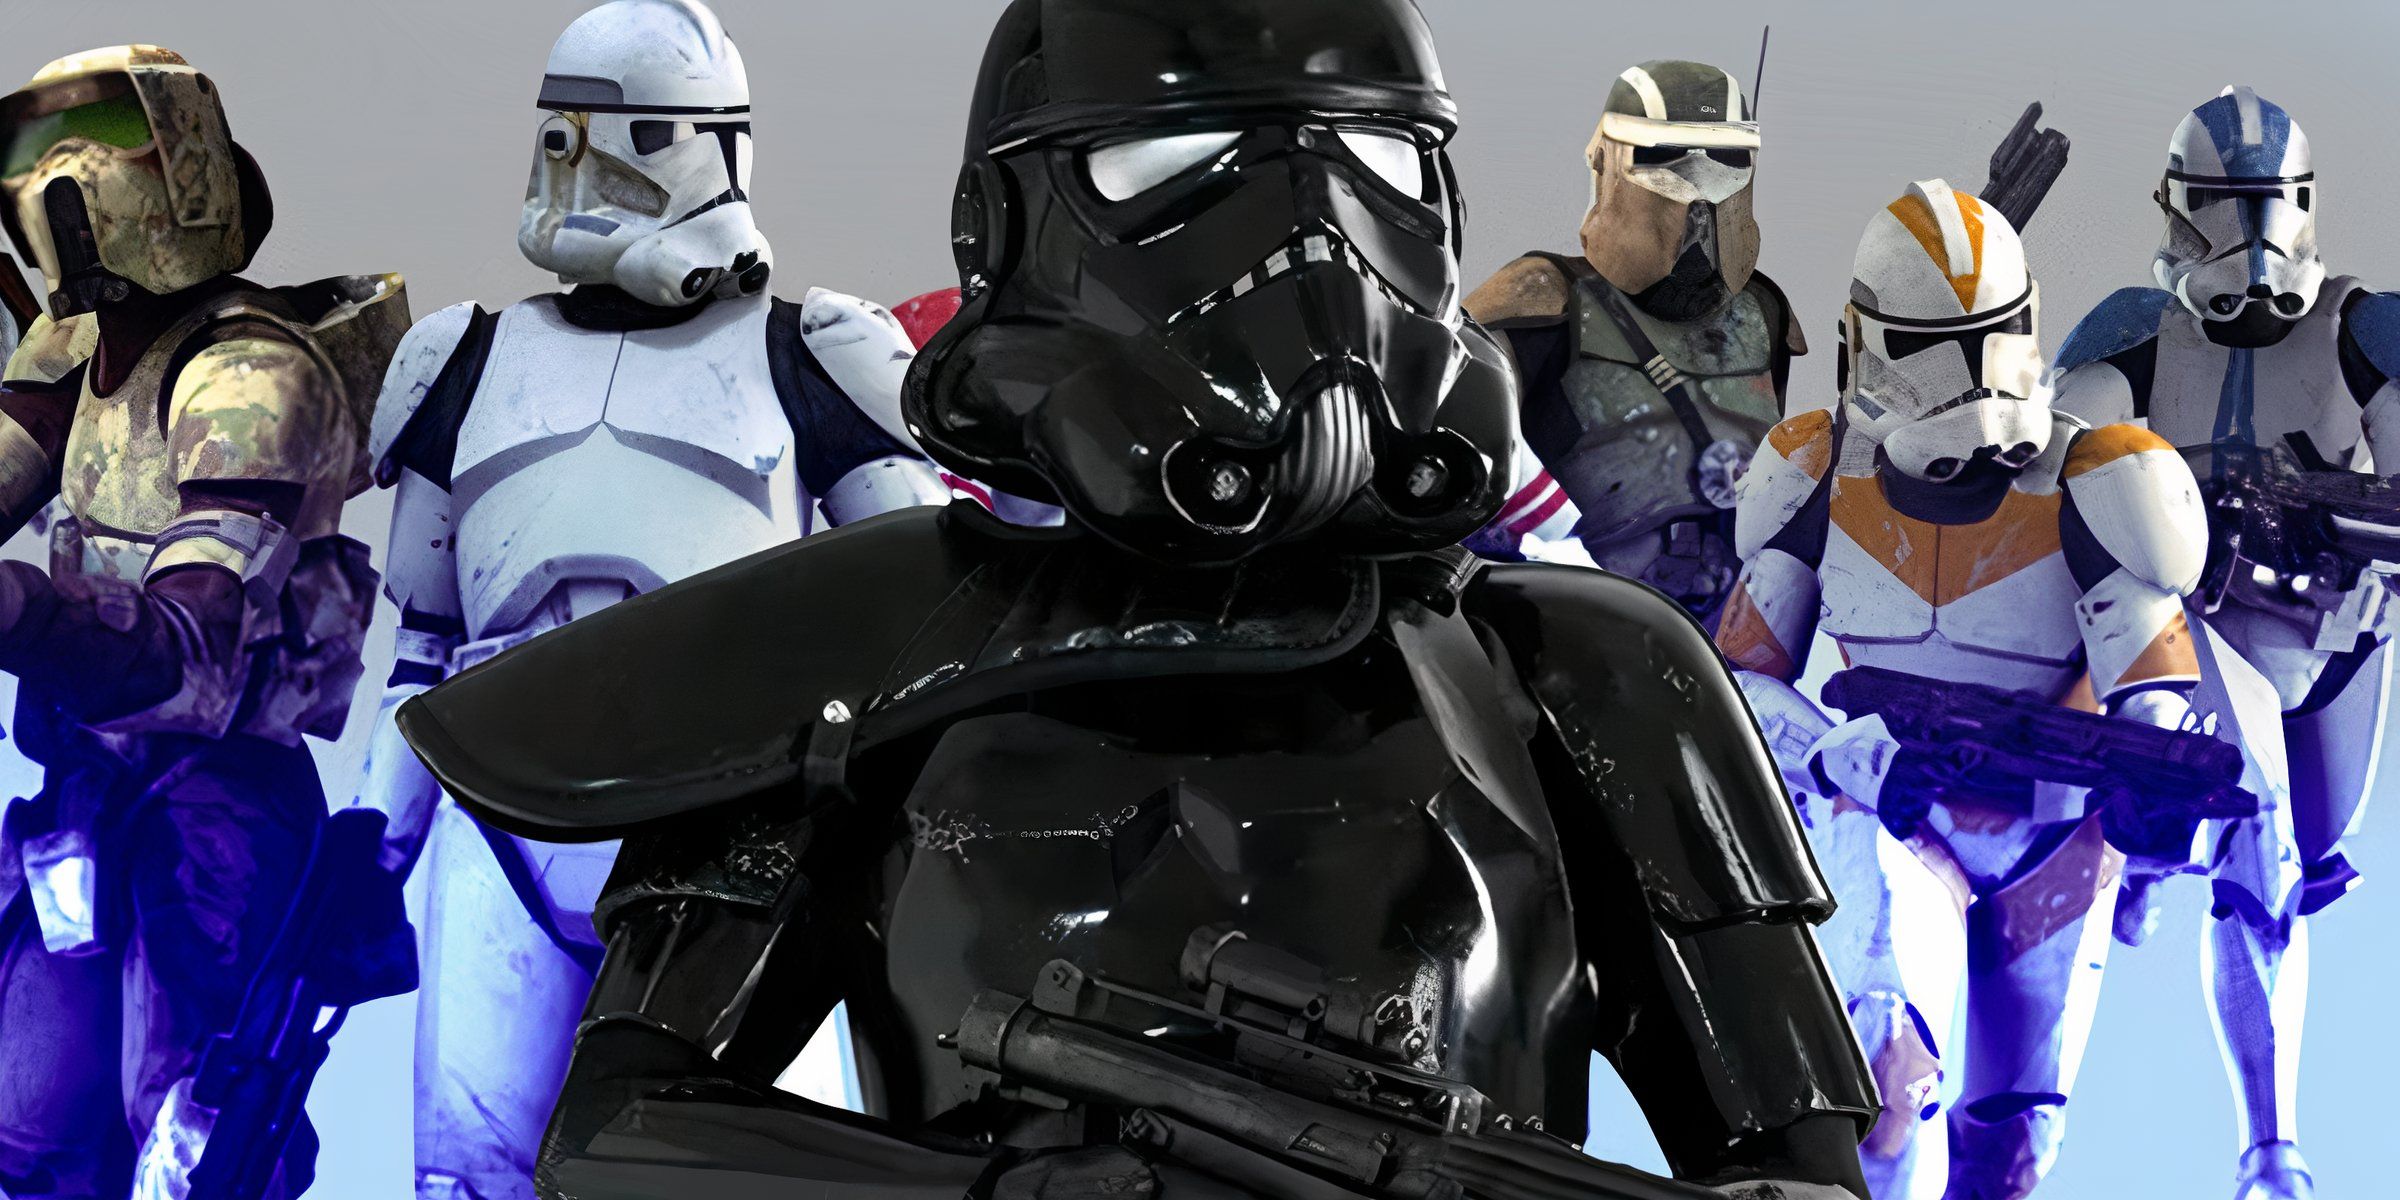 Clone Trooper Types in Star Wars